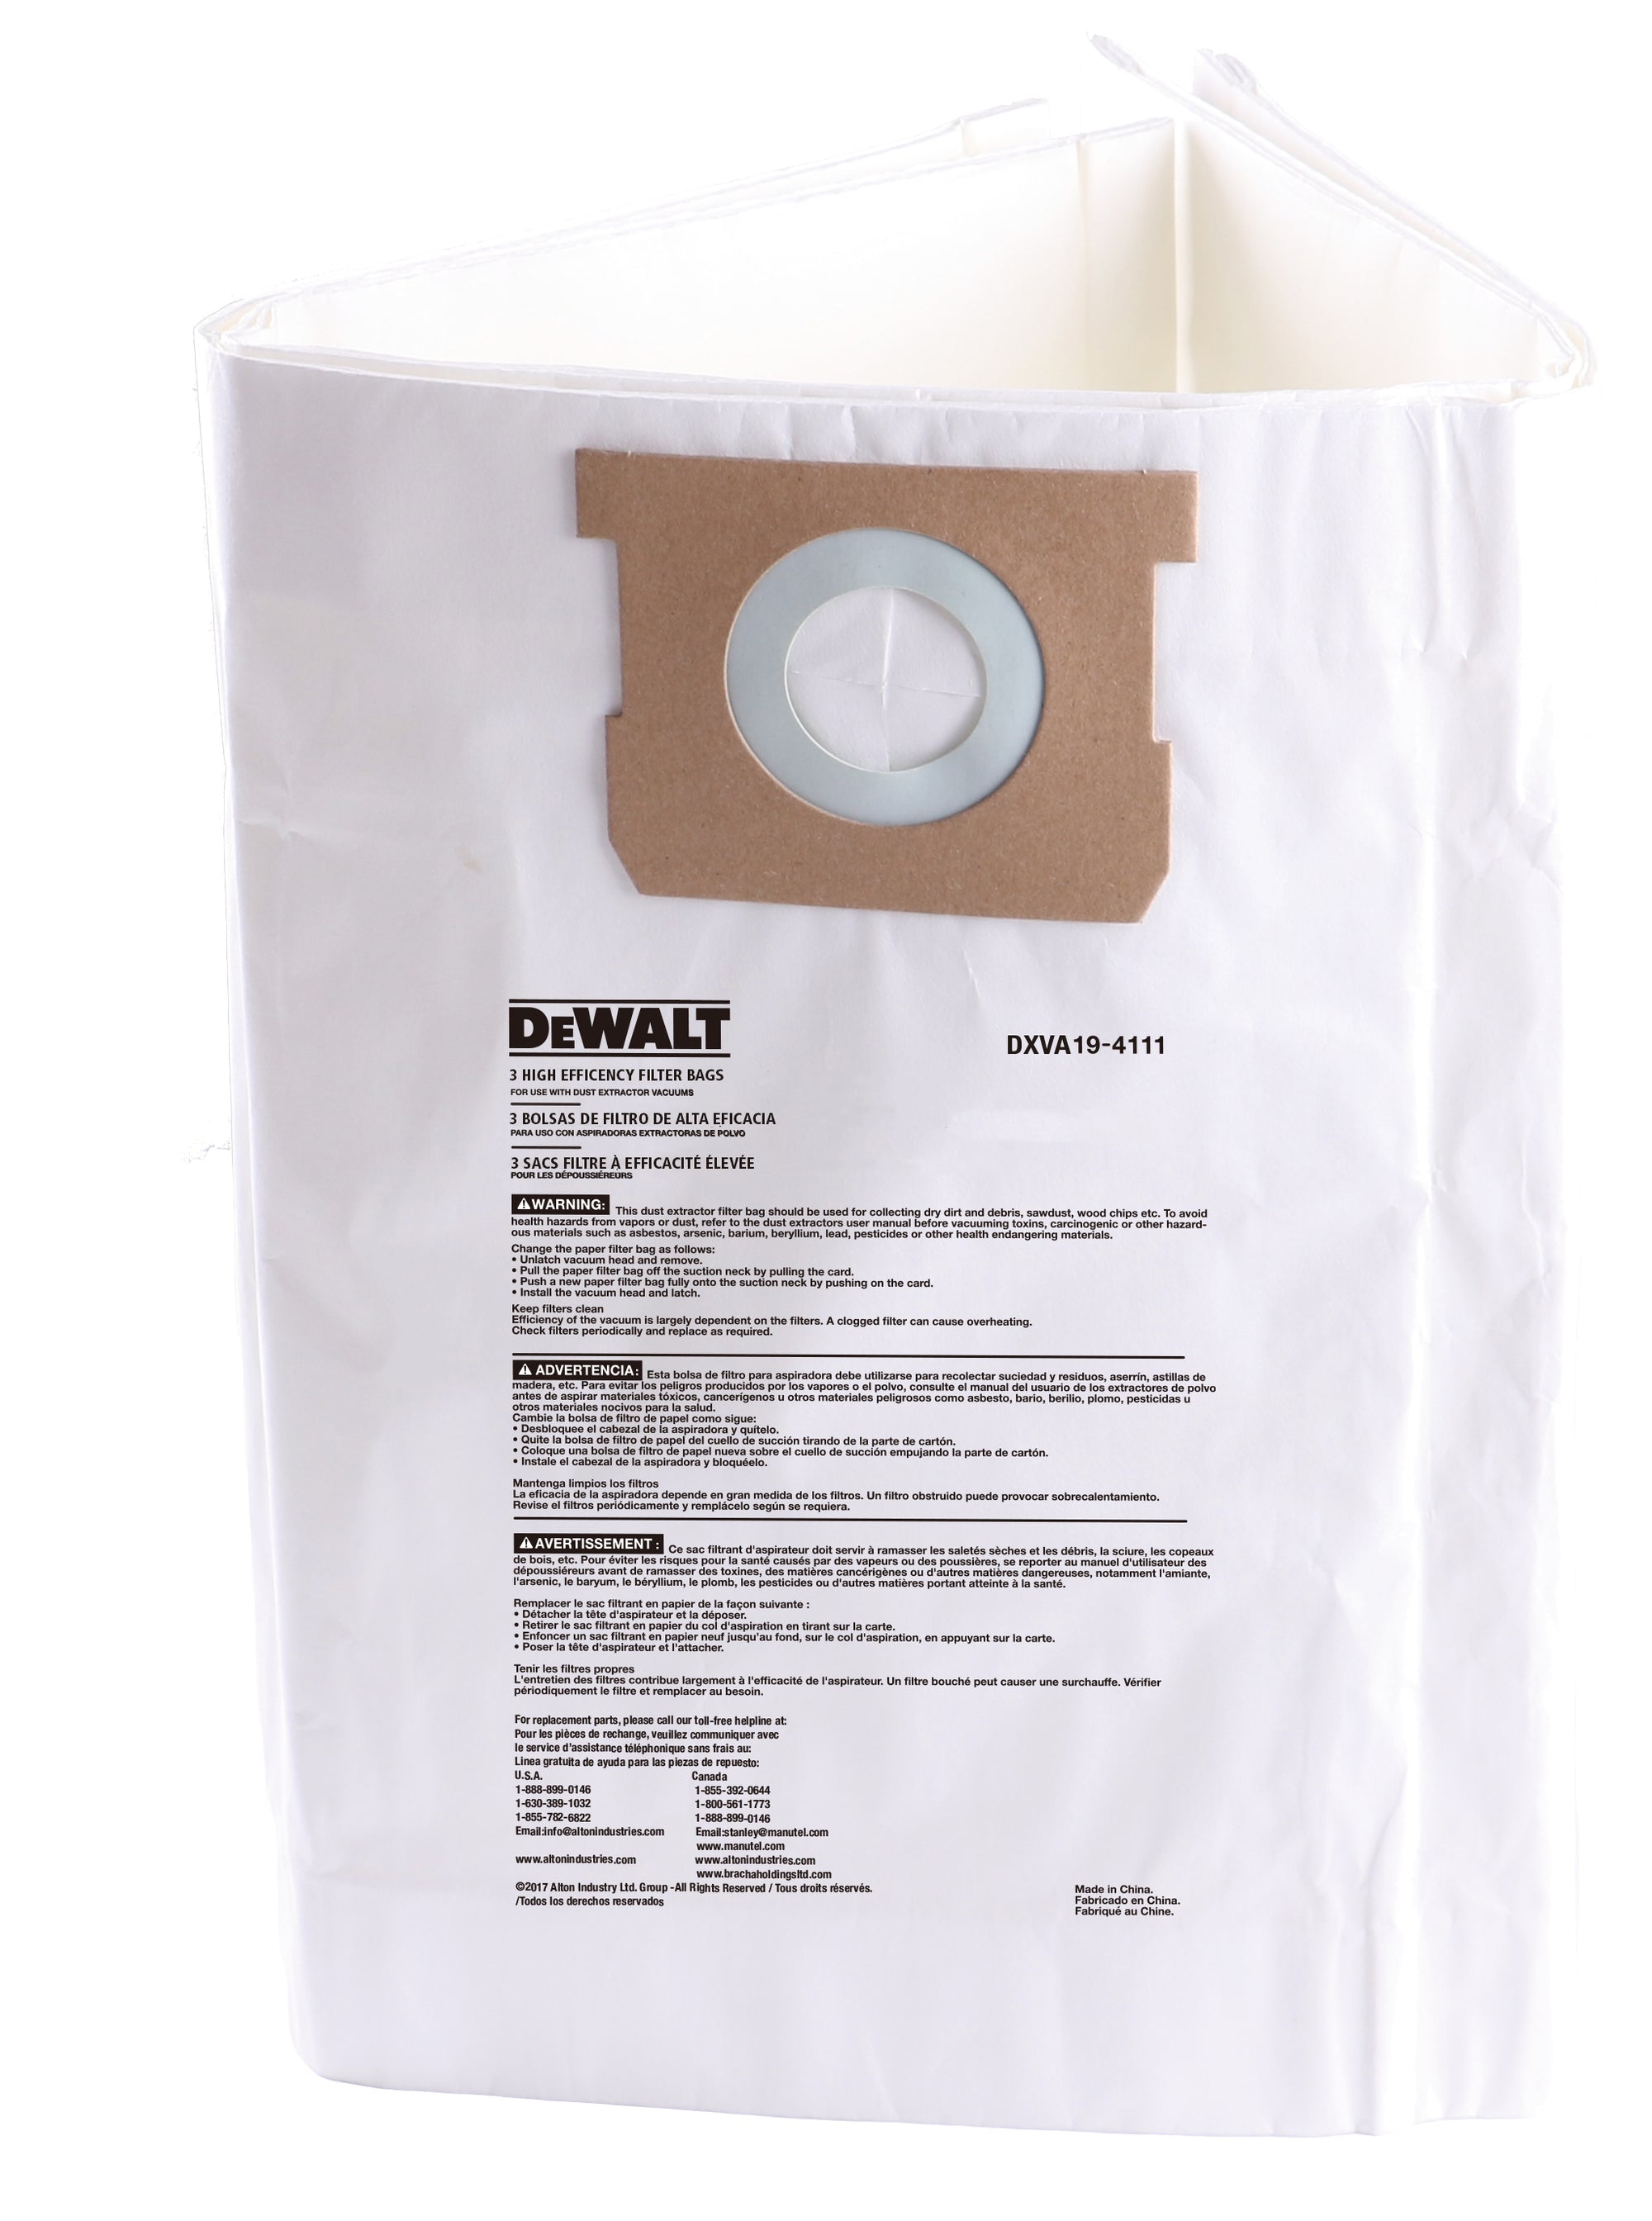 DXVA19-4111 DeWalt High Efficiency Filter Bag (3) for 6-10 Gallon DeWalt Wet/Dry Vacuums